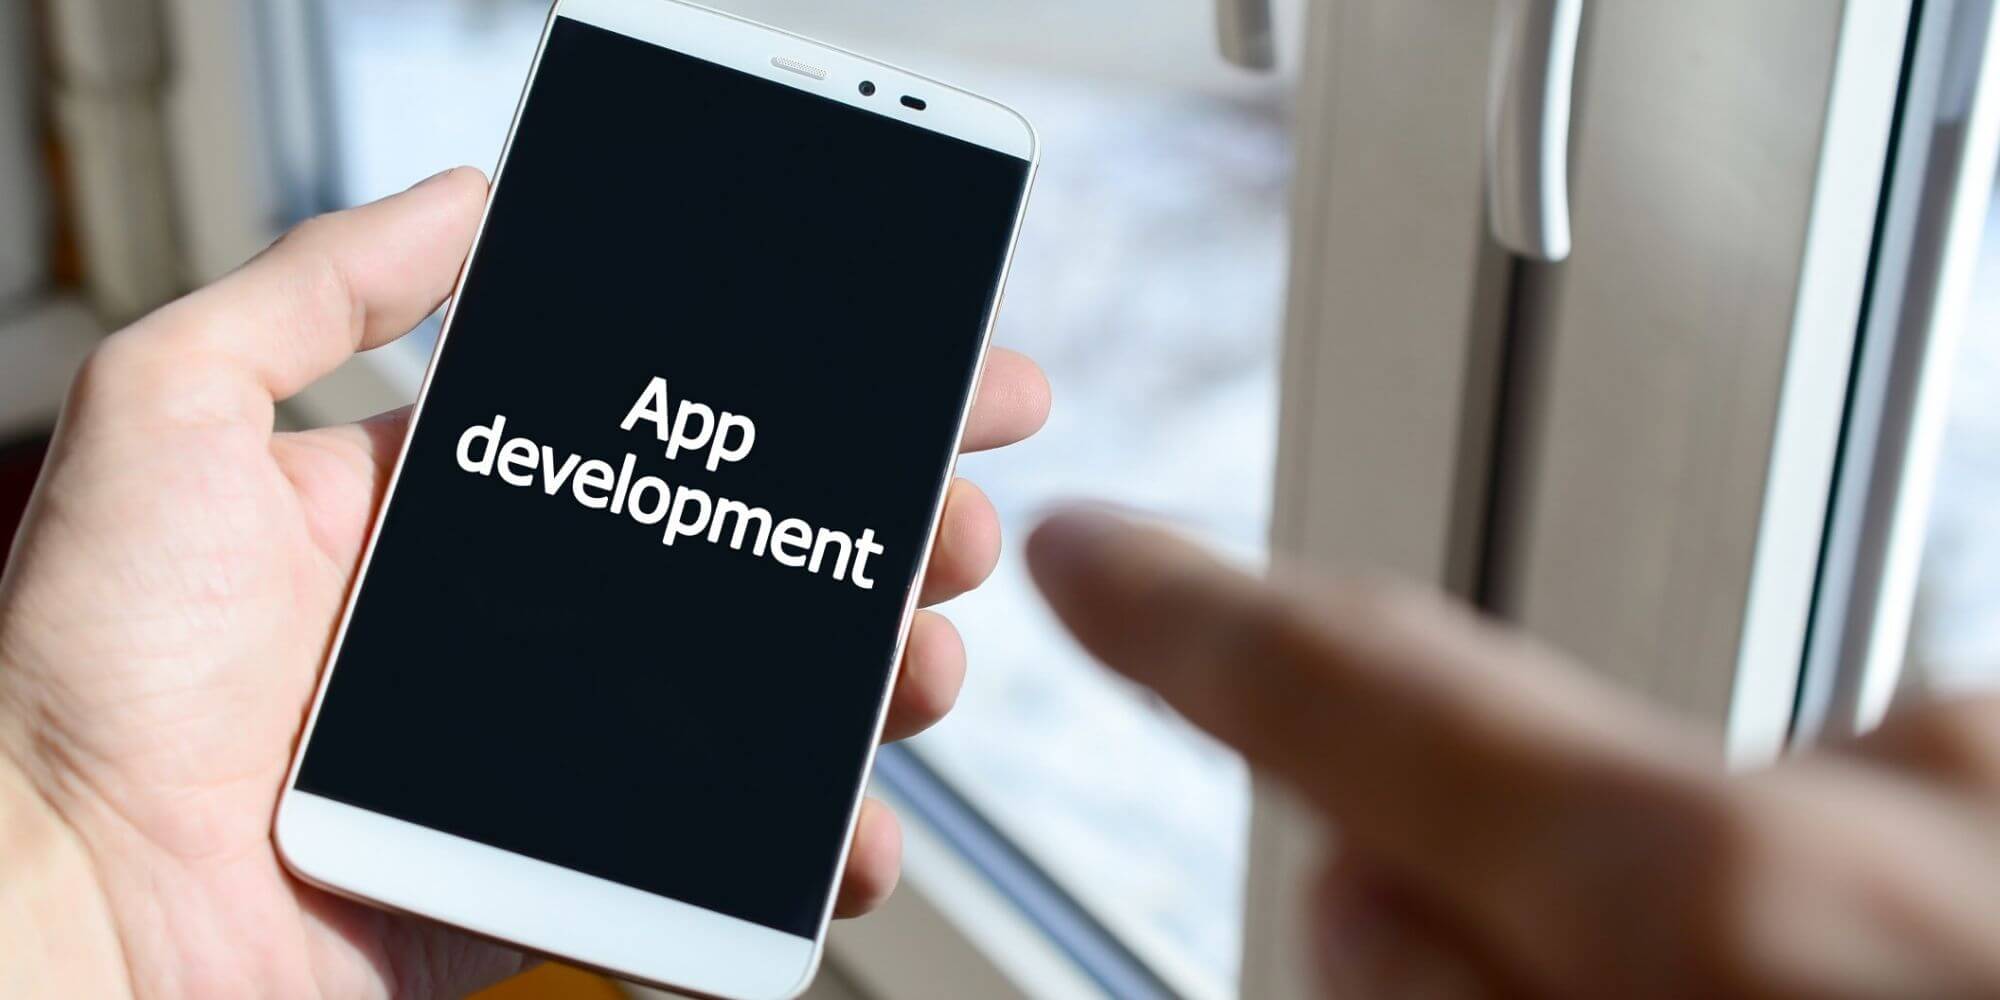 mobile app development process for startup